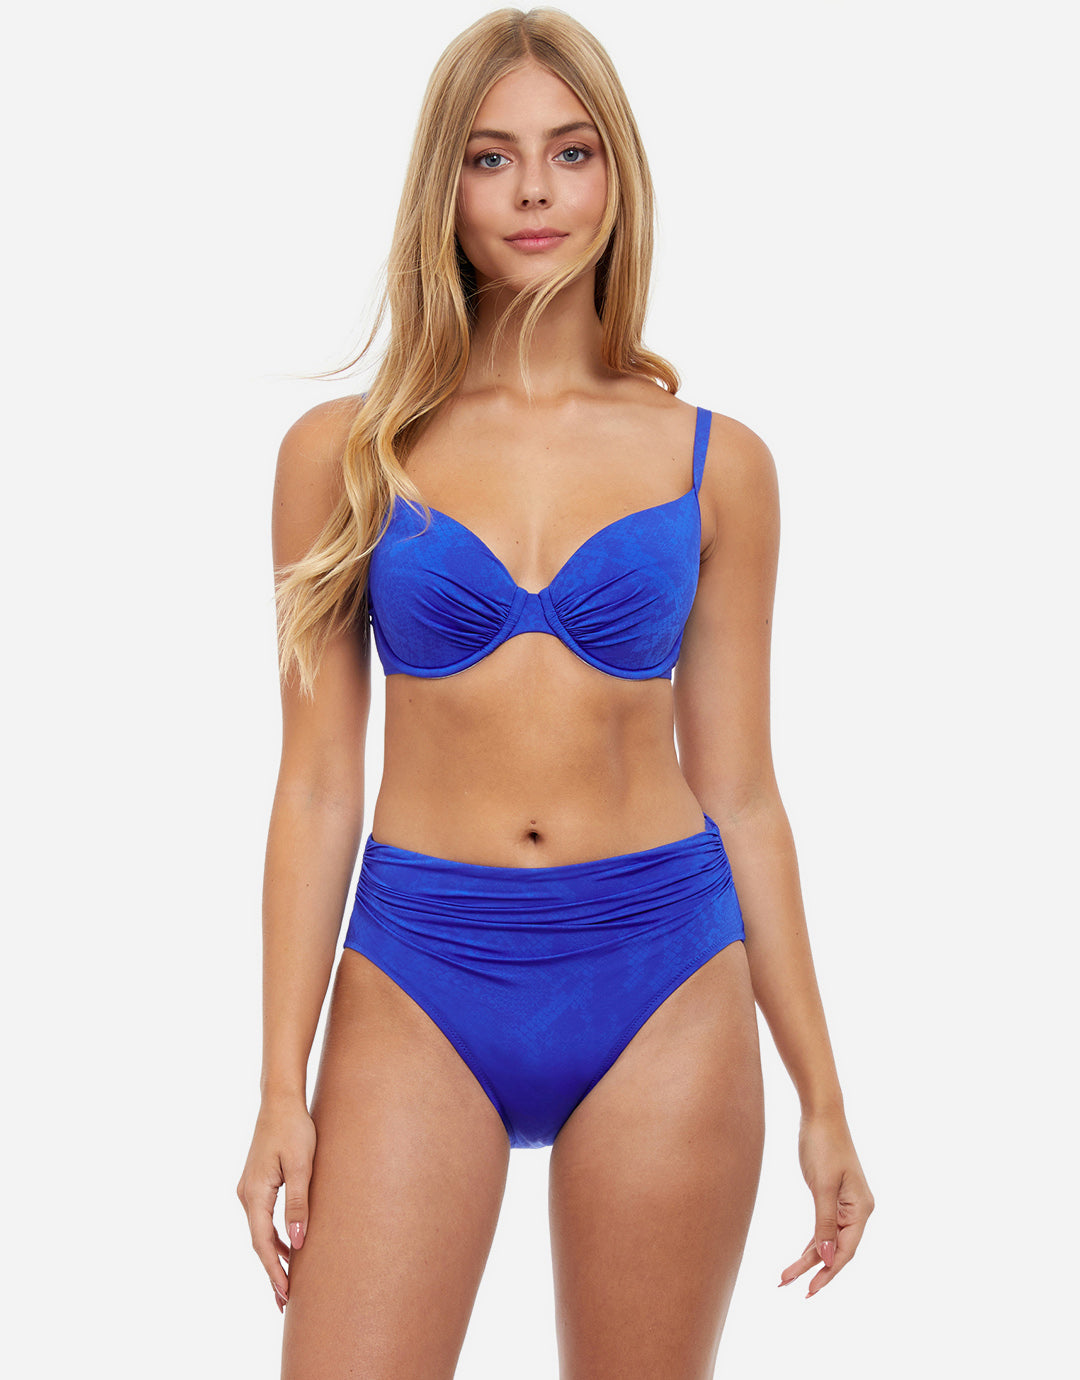 Aqua Blu - Muse Lucy D/DD Cup Bikini Top: Blue - A La Plage